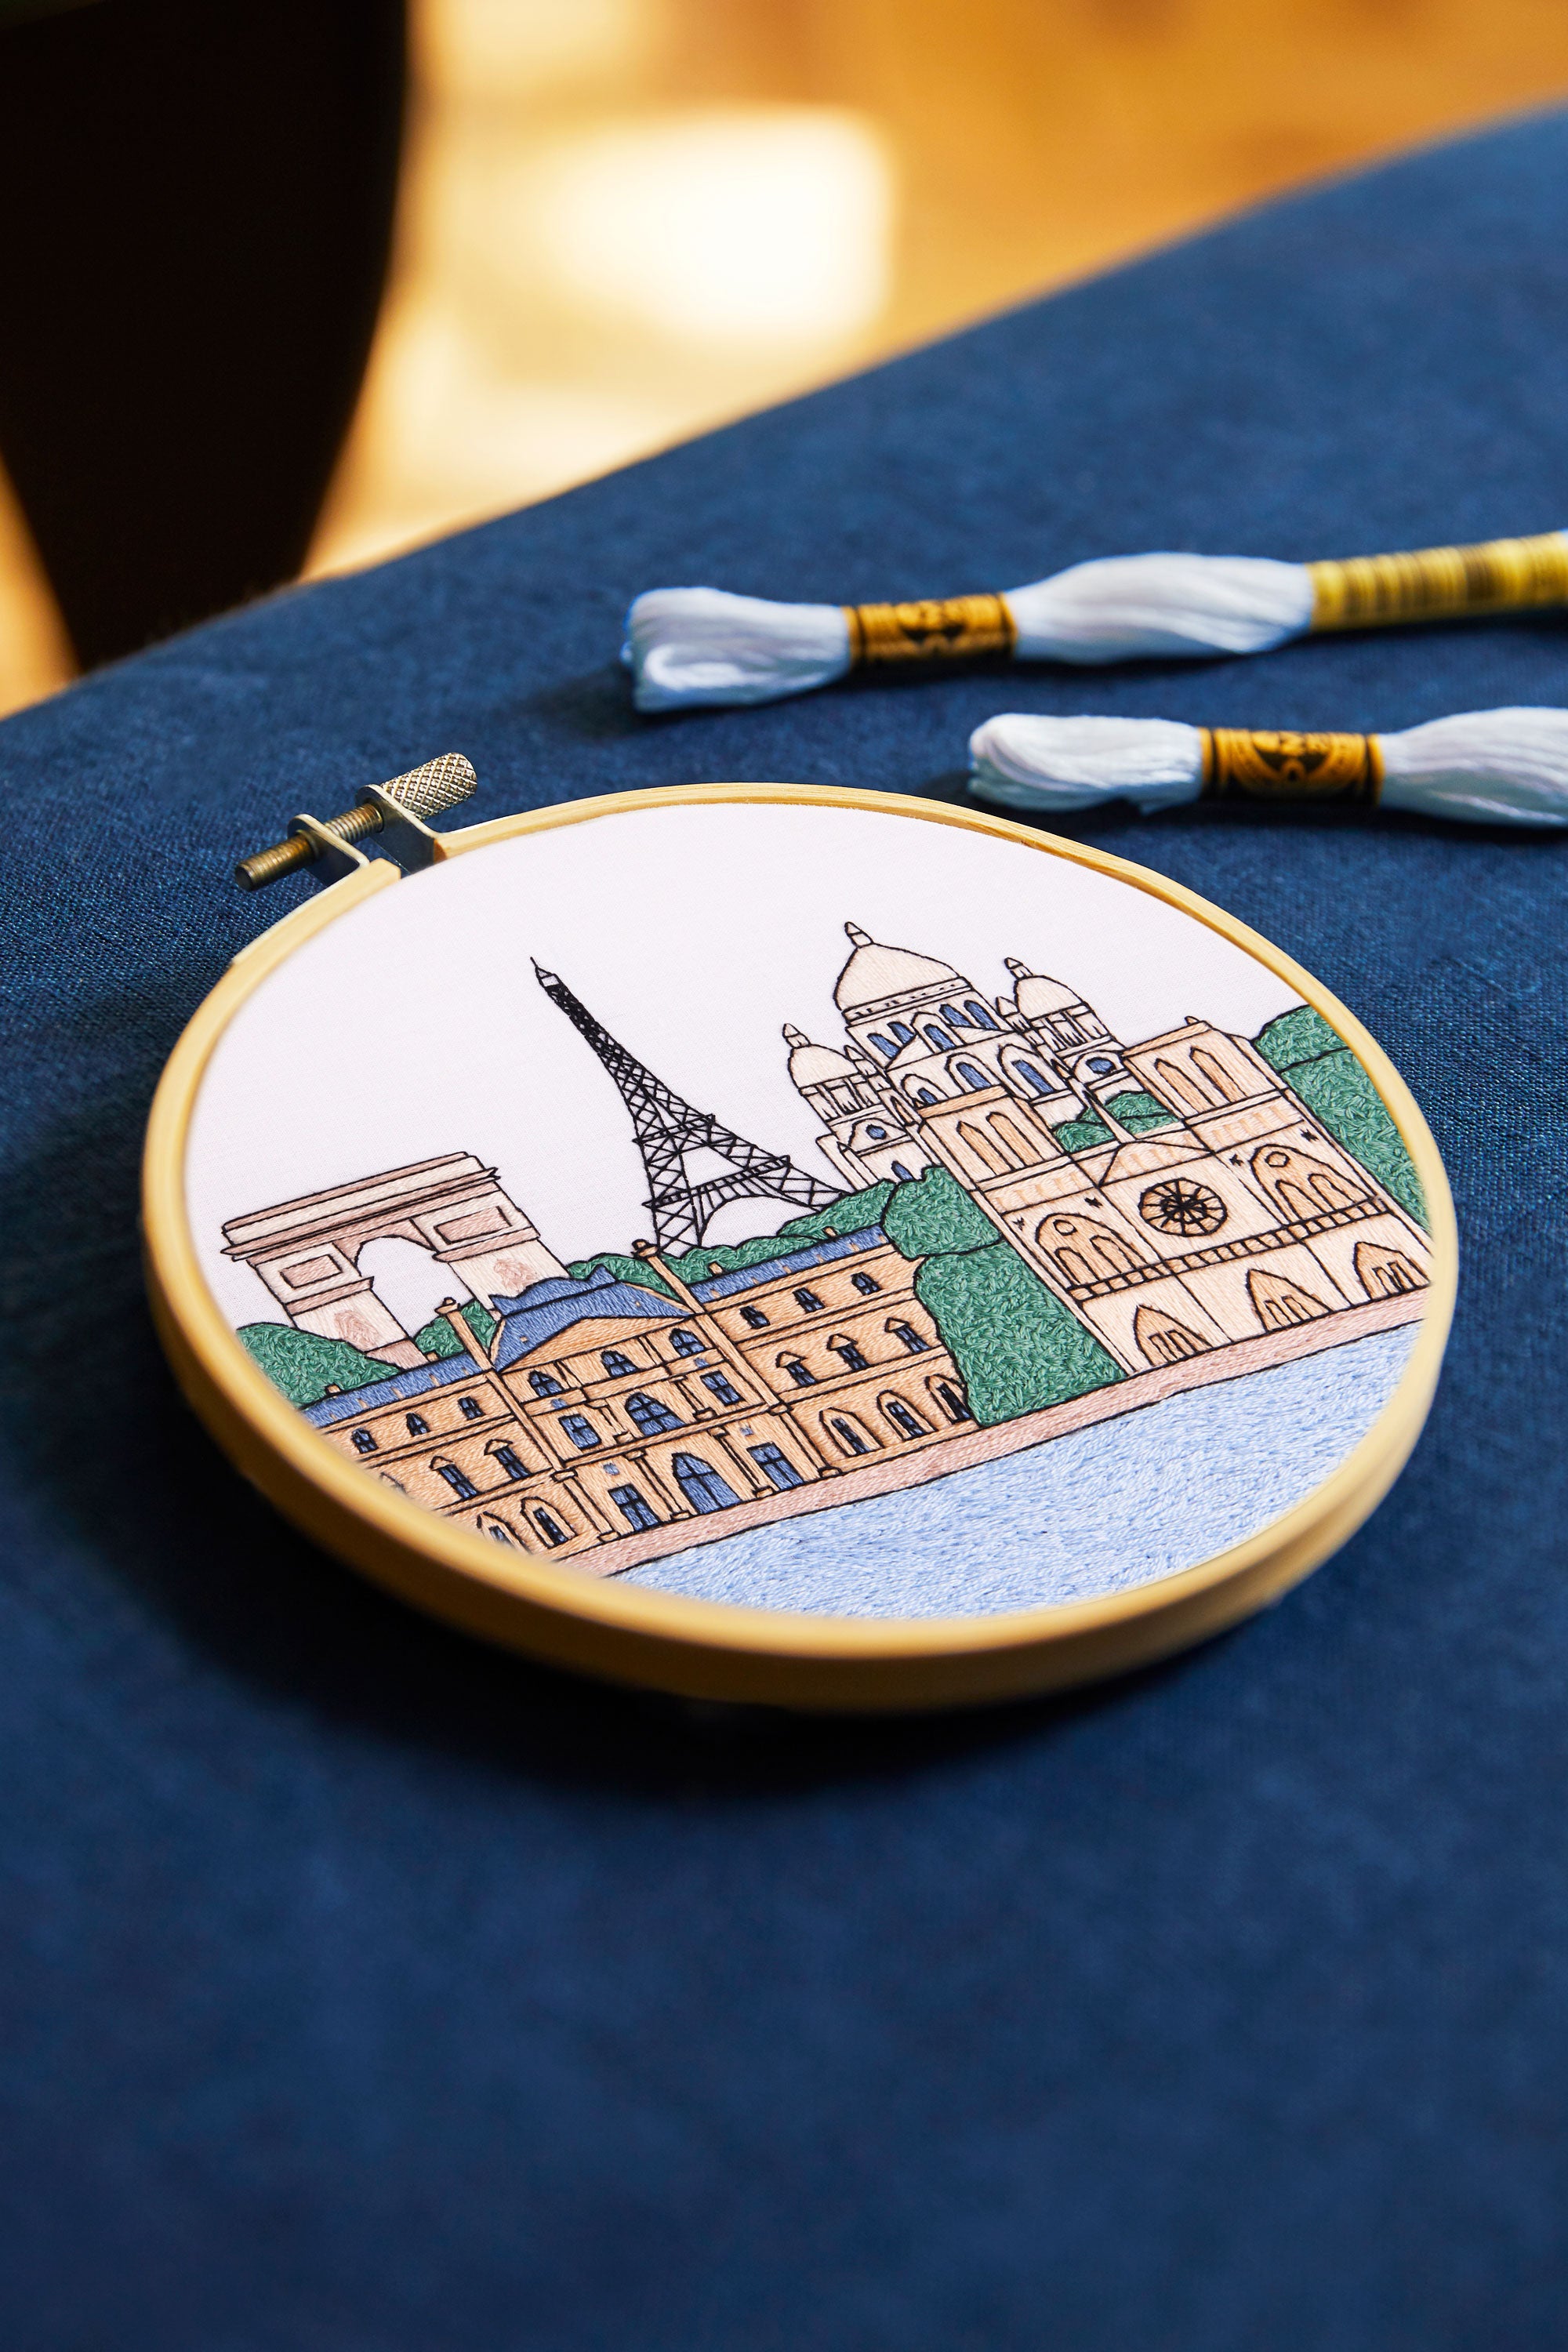 DMC Paris Landmarks by Kseniia Guseva (Embroidery Kit)